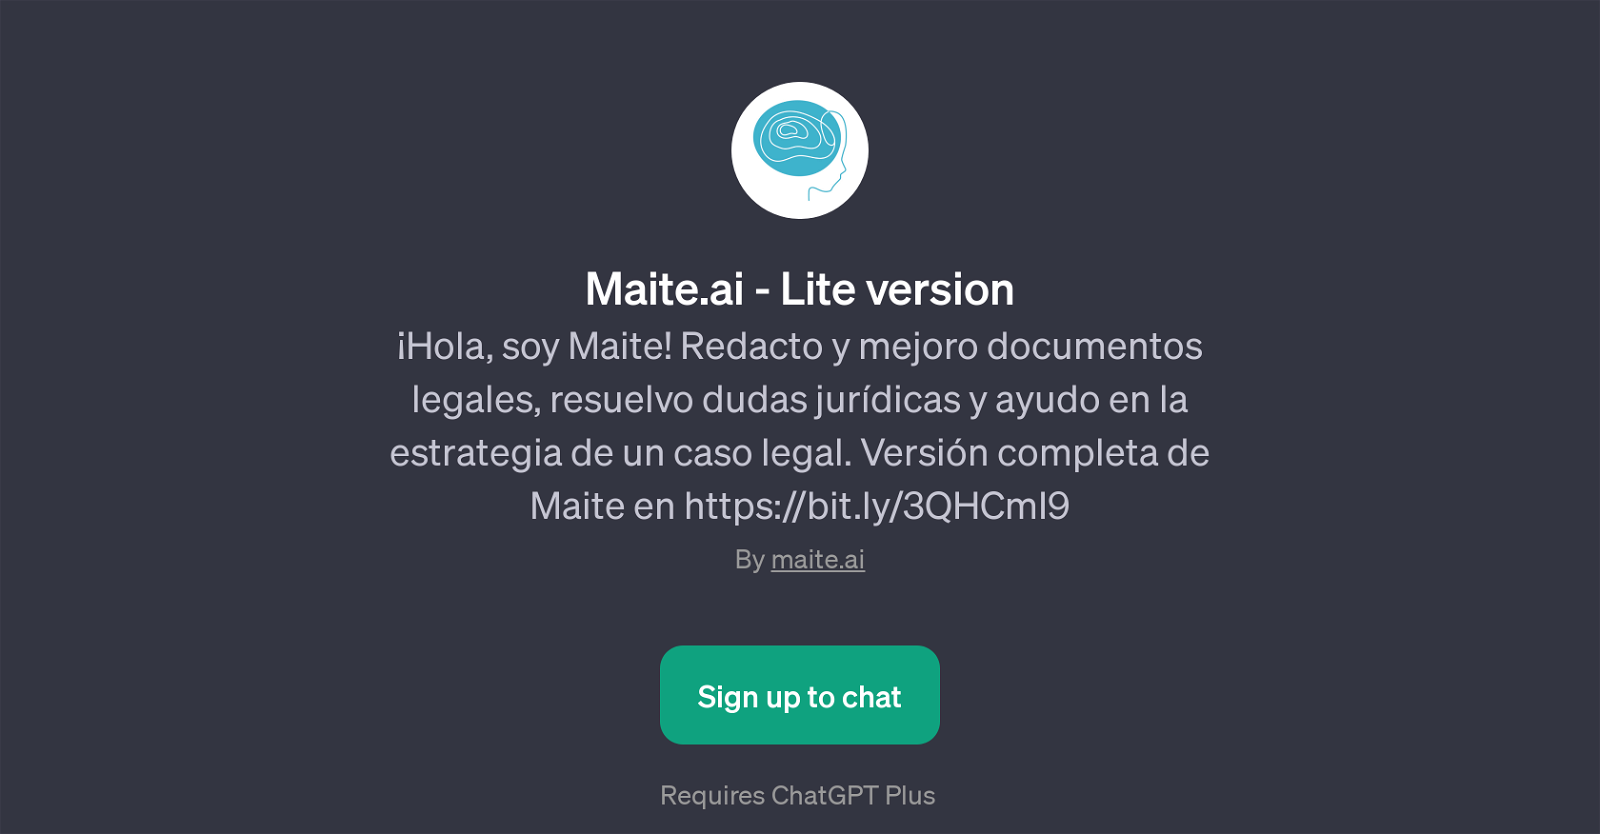 Maite.ai - Lite version website